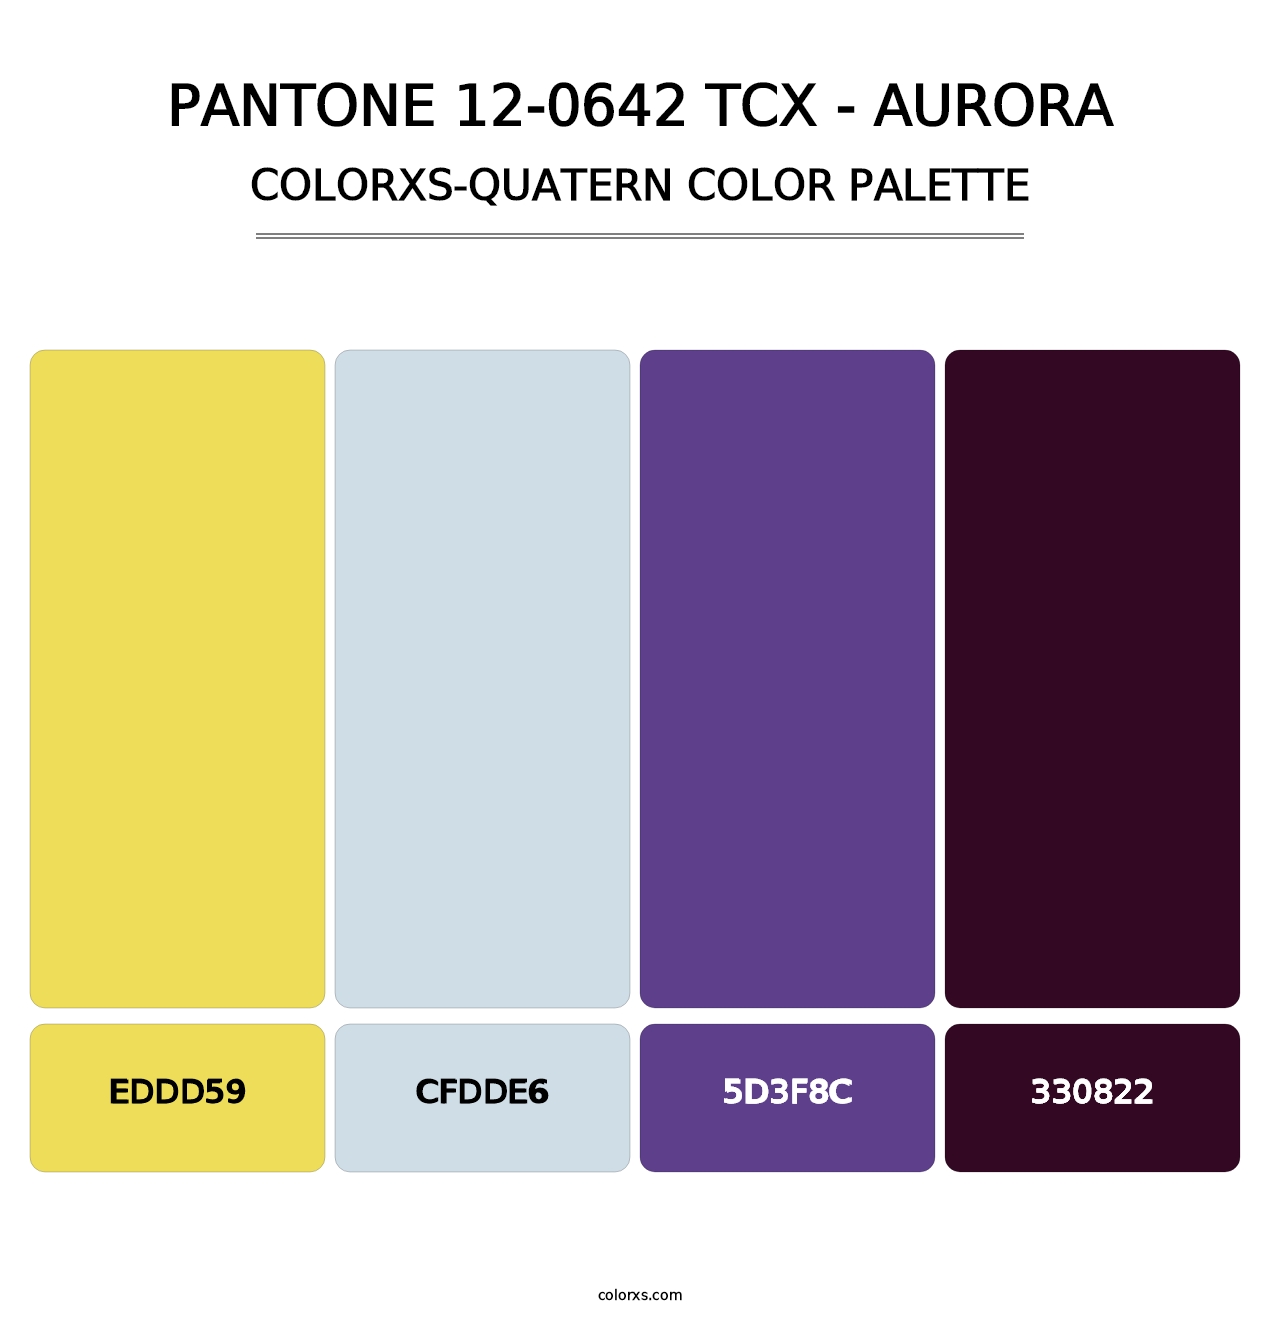 PANTONE 12-0642 TCX - Aurora - Colorxs Quatern Palette